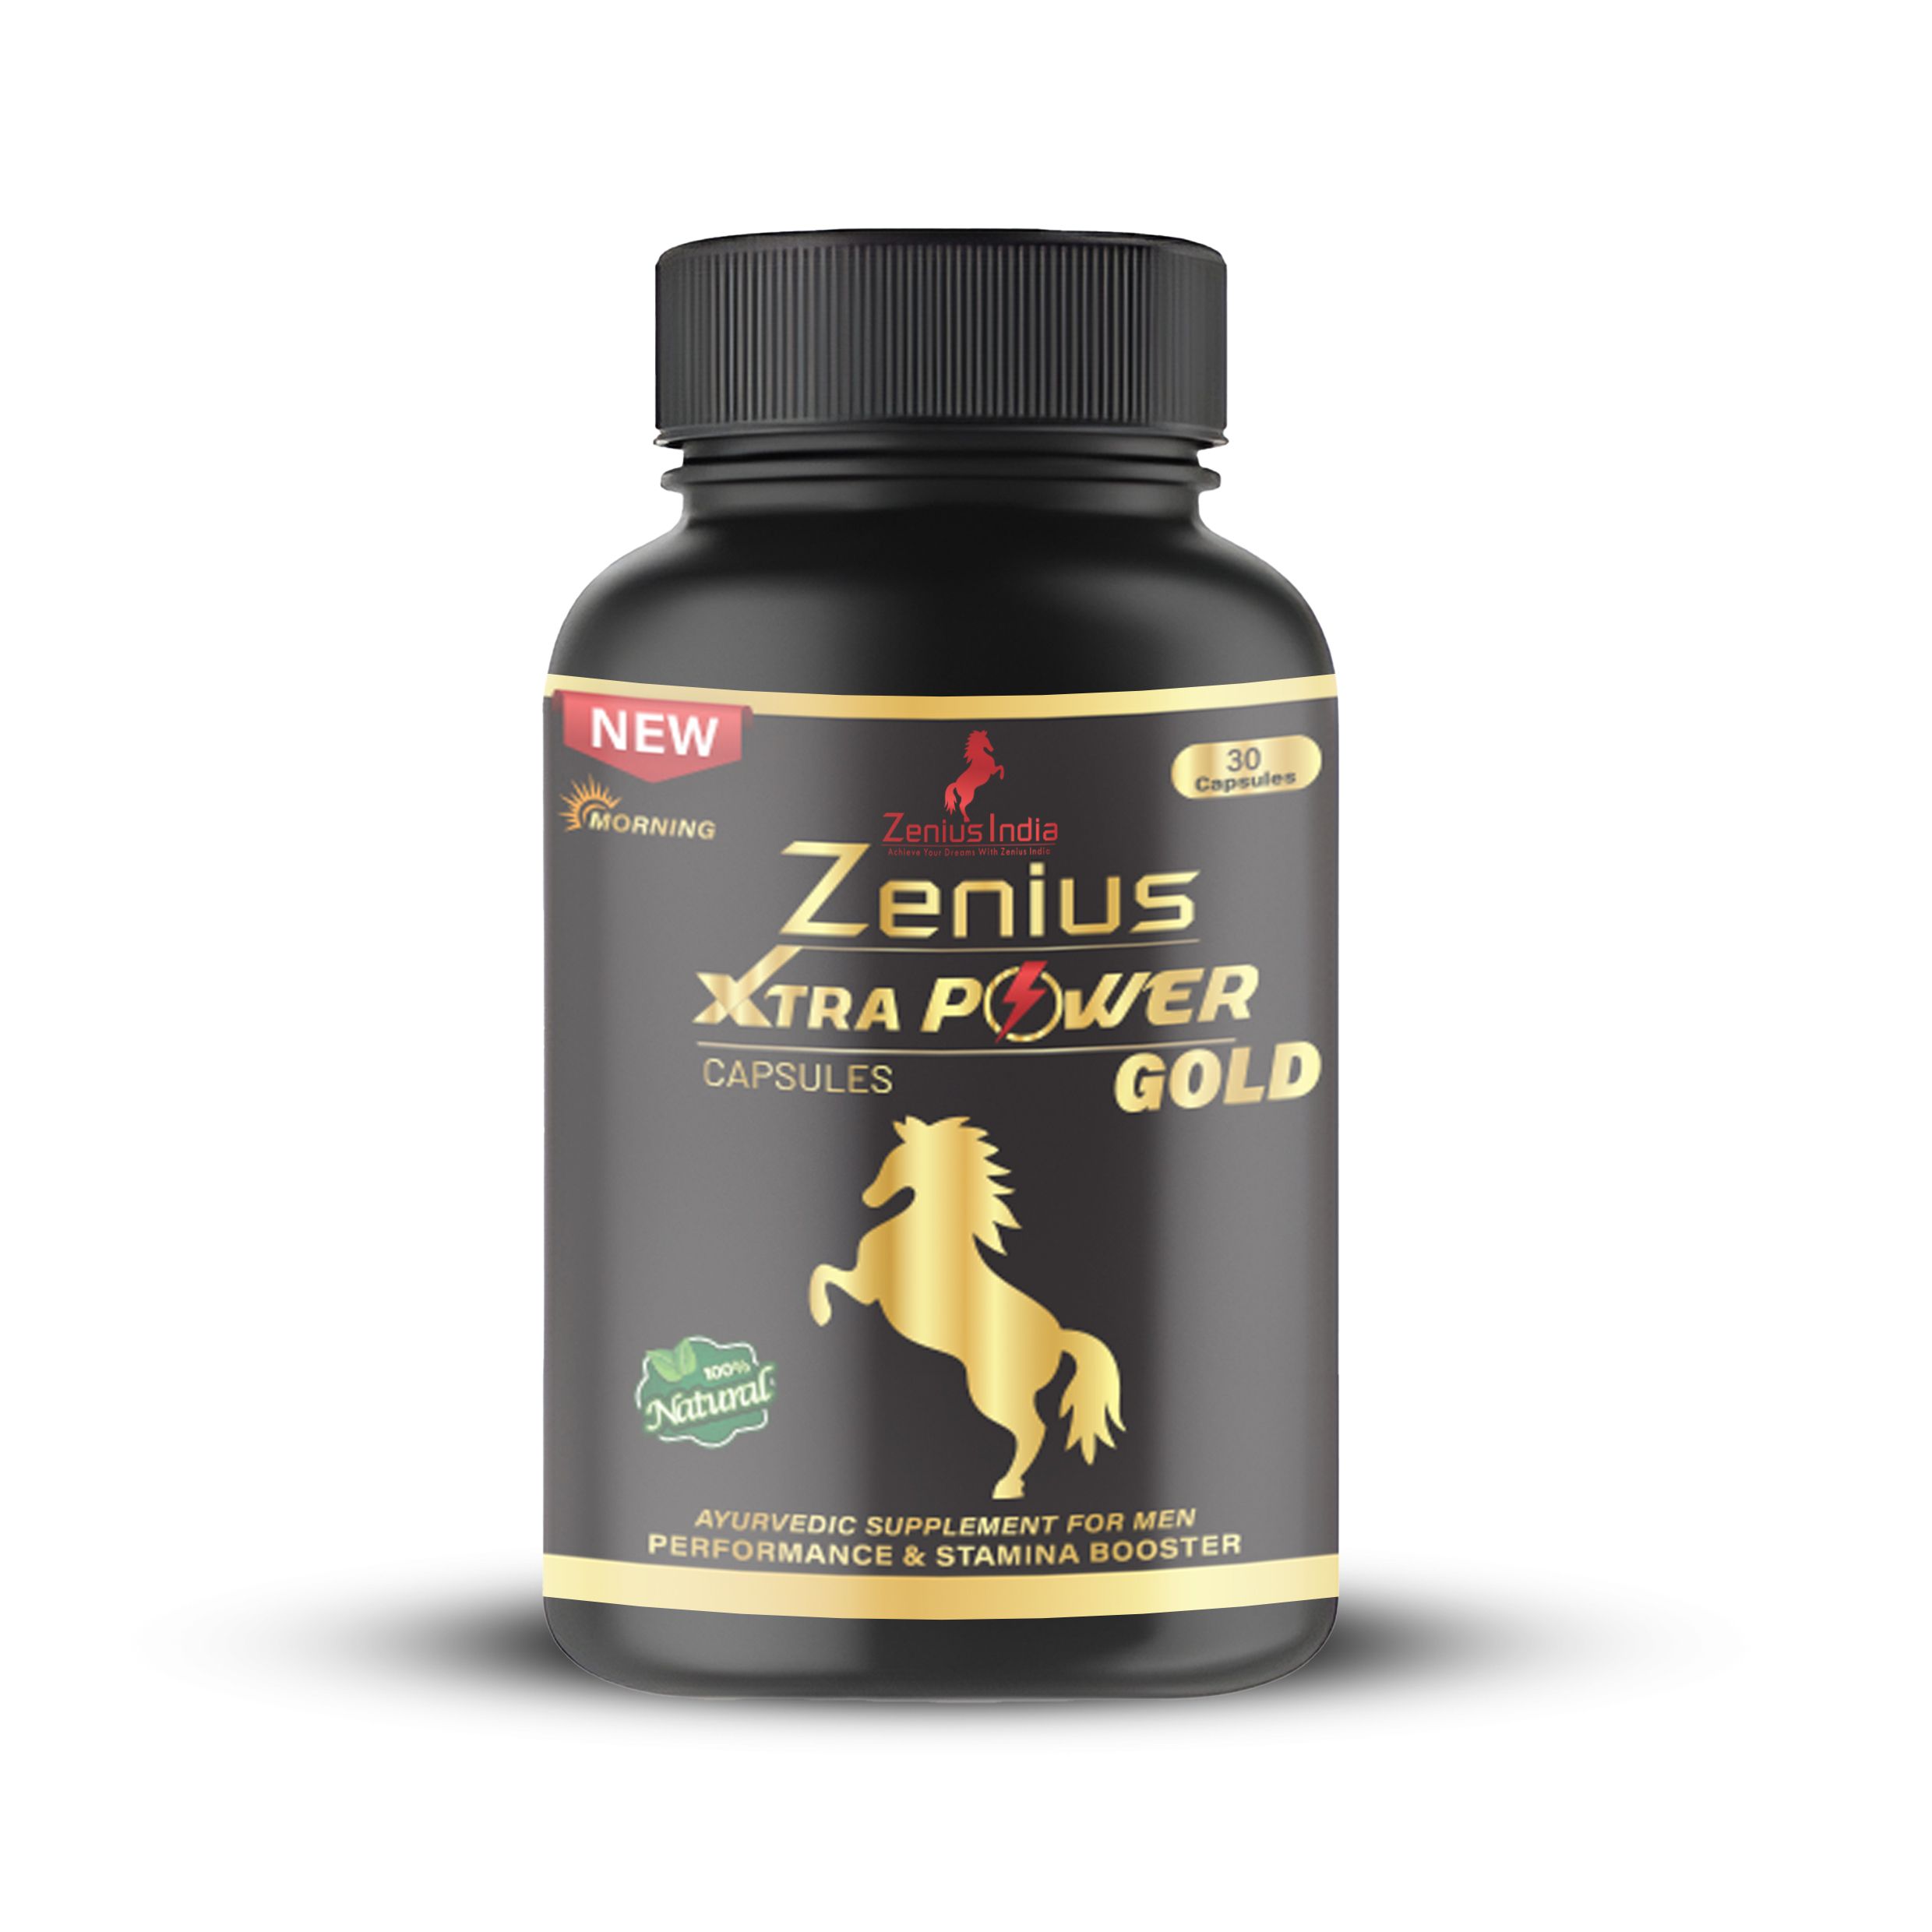 Buy Zenius Xtar Power Gold Capsule_M at Best Price Online